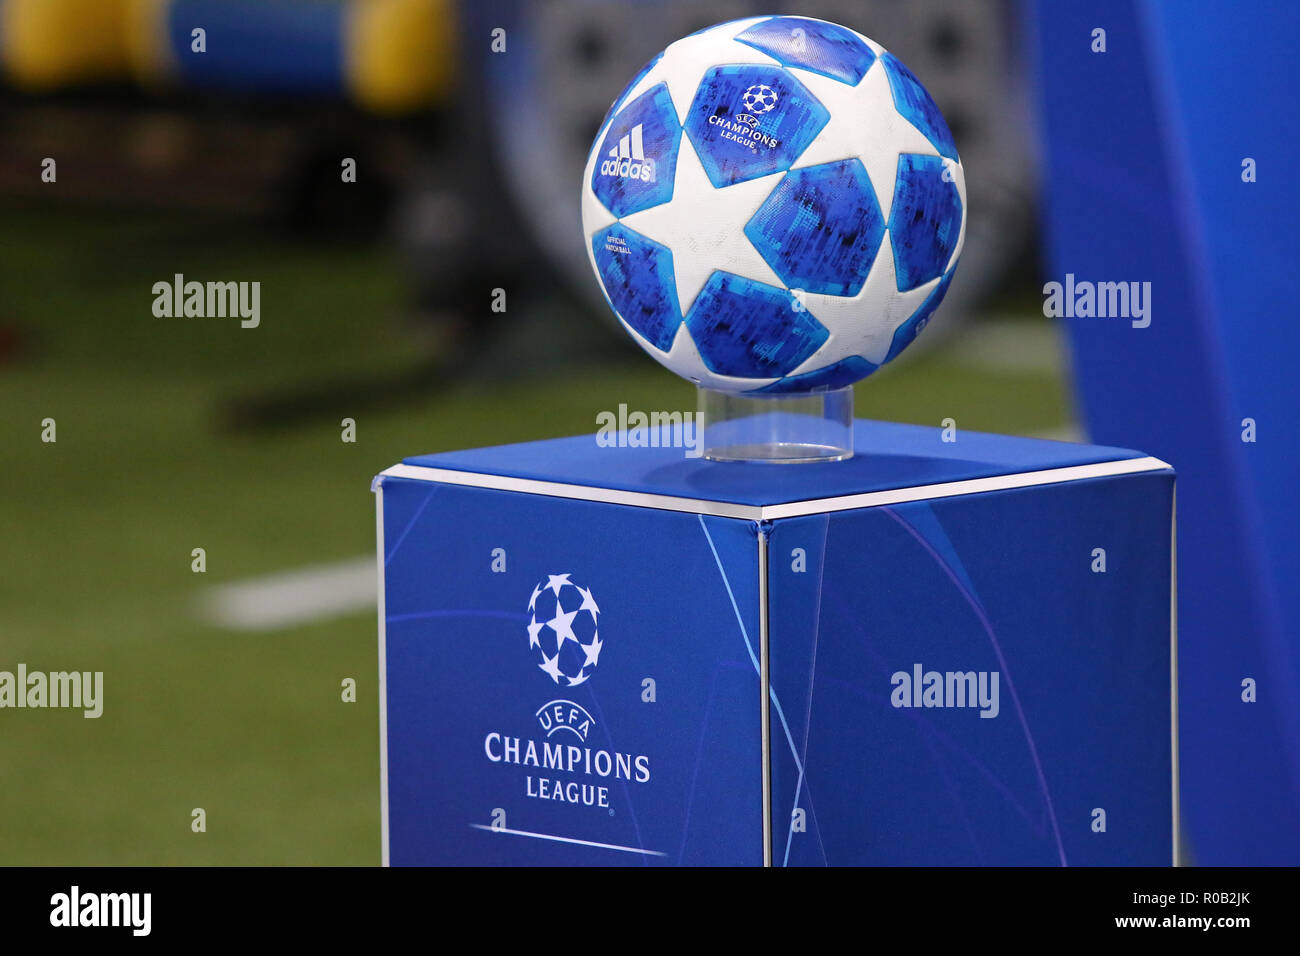 uefa champions league ball blue